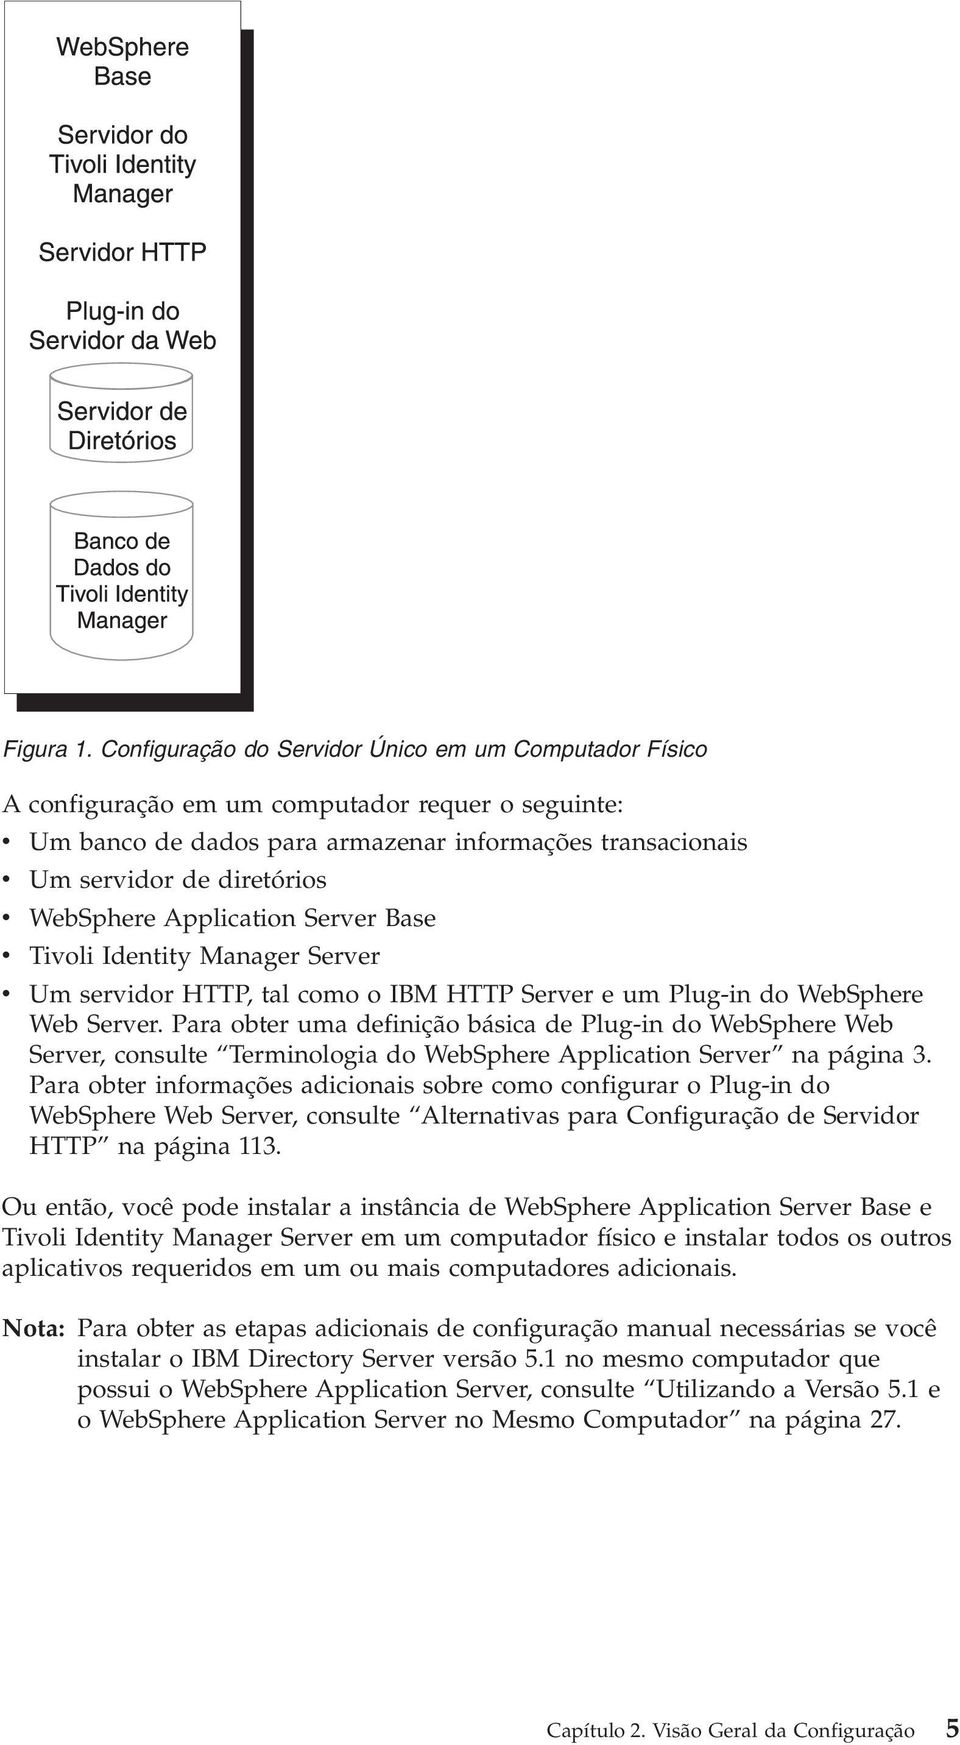 Application Serer Base Tioli Identity Manager Serer Um seridor HTTP, tal como o IBM HTTP Serer e um Plug-in do WebSphere Web Serer.